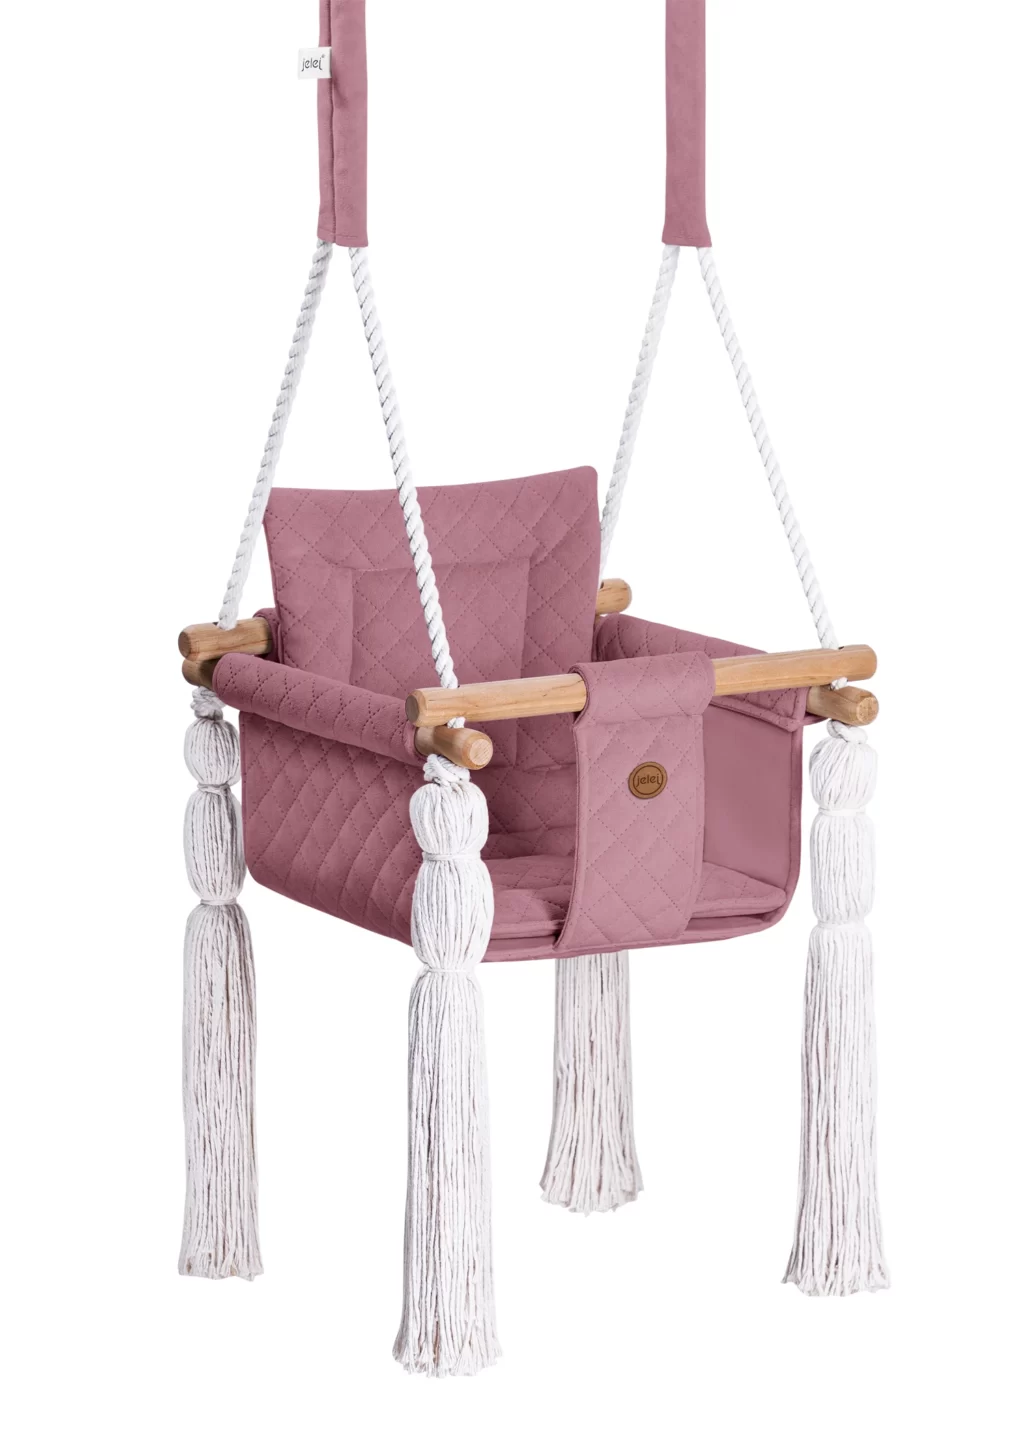 jelej® Hopla Rosy wooden baby swing stylish pillow